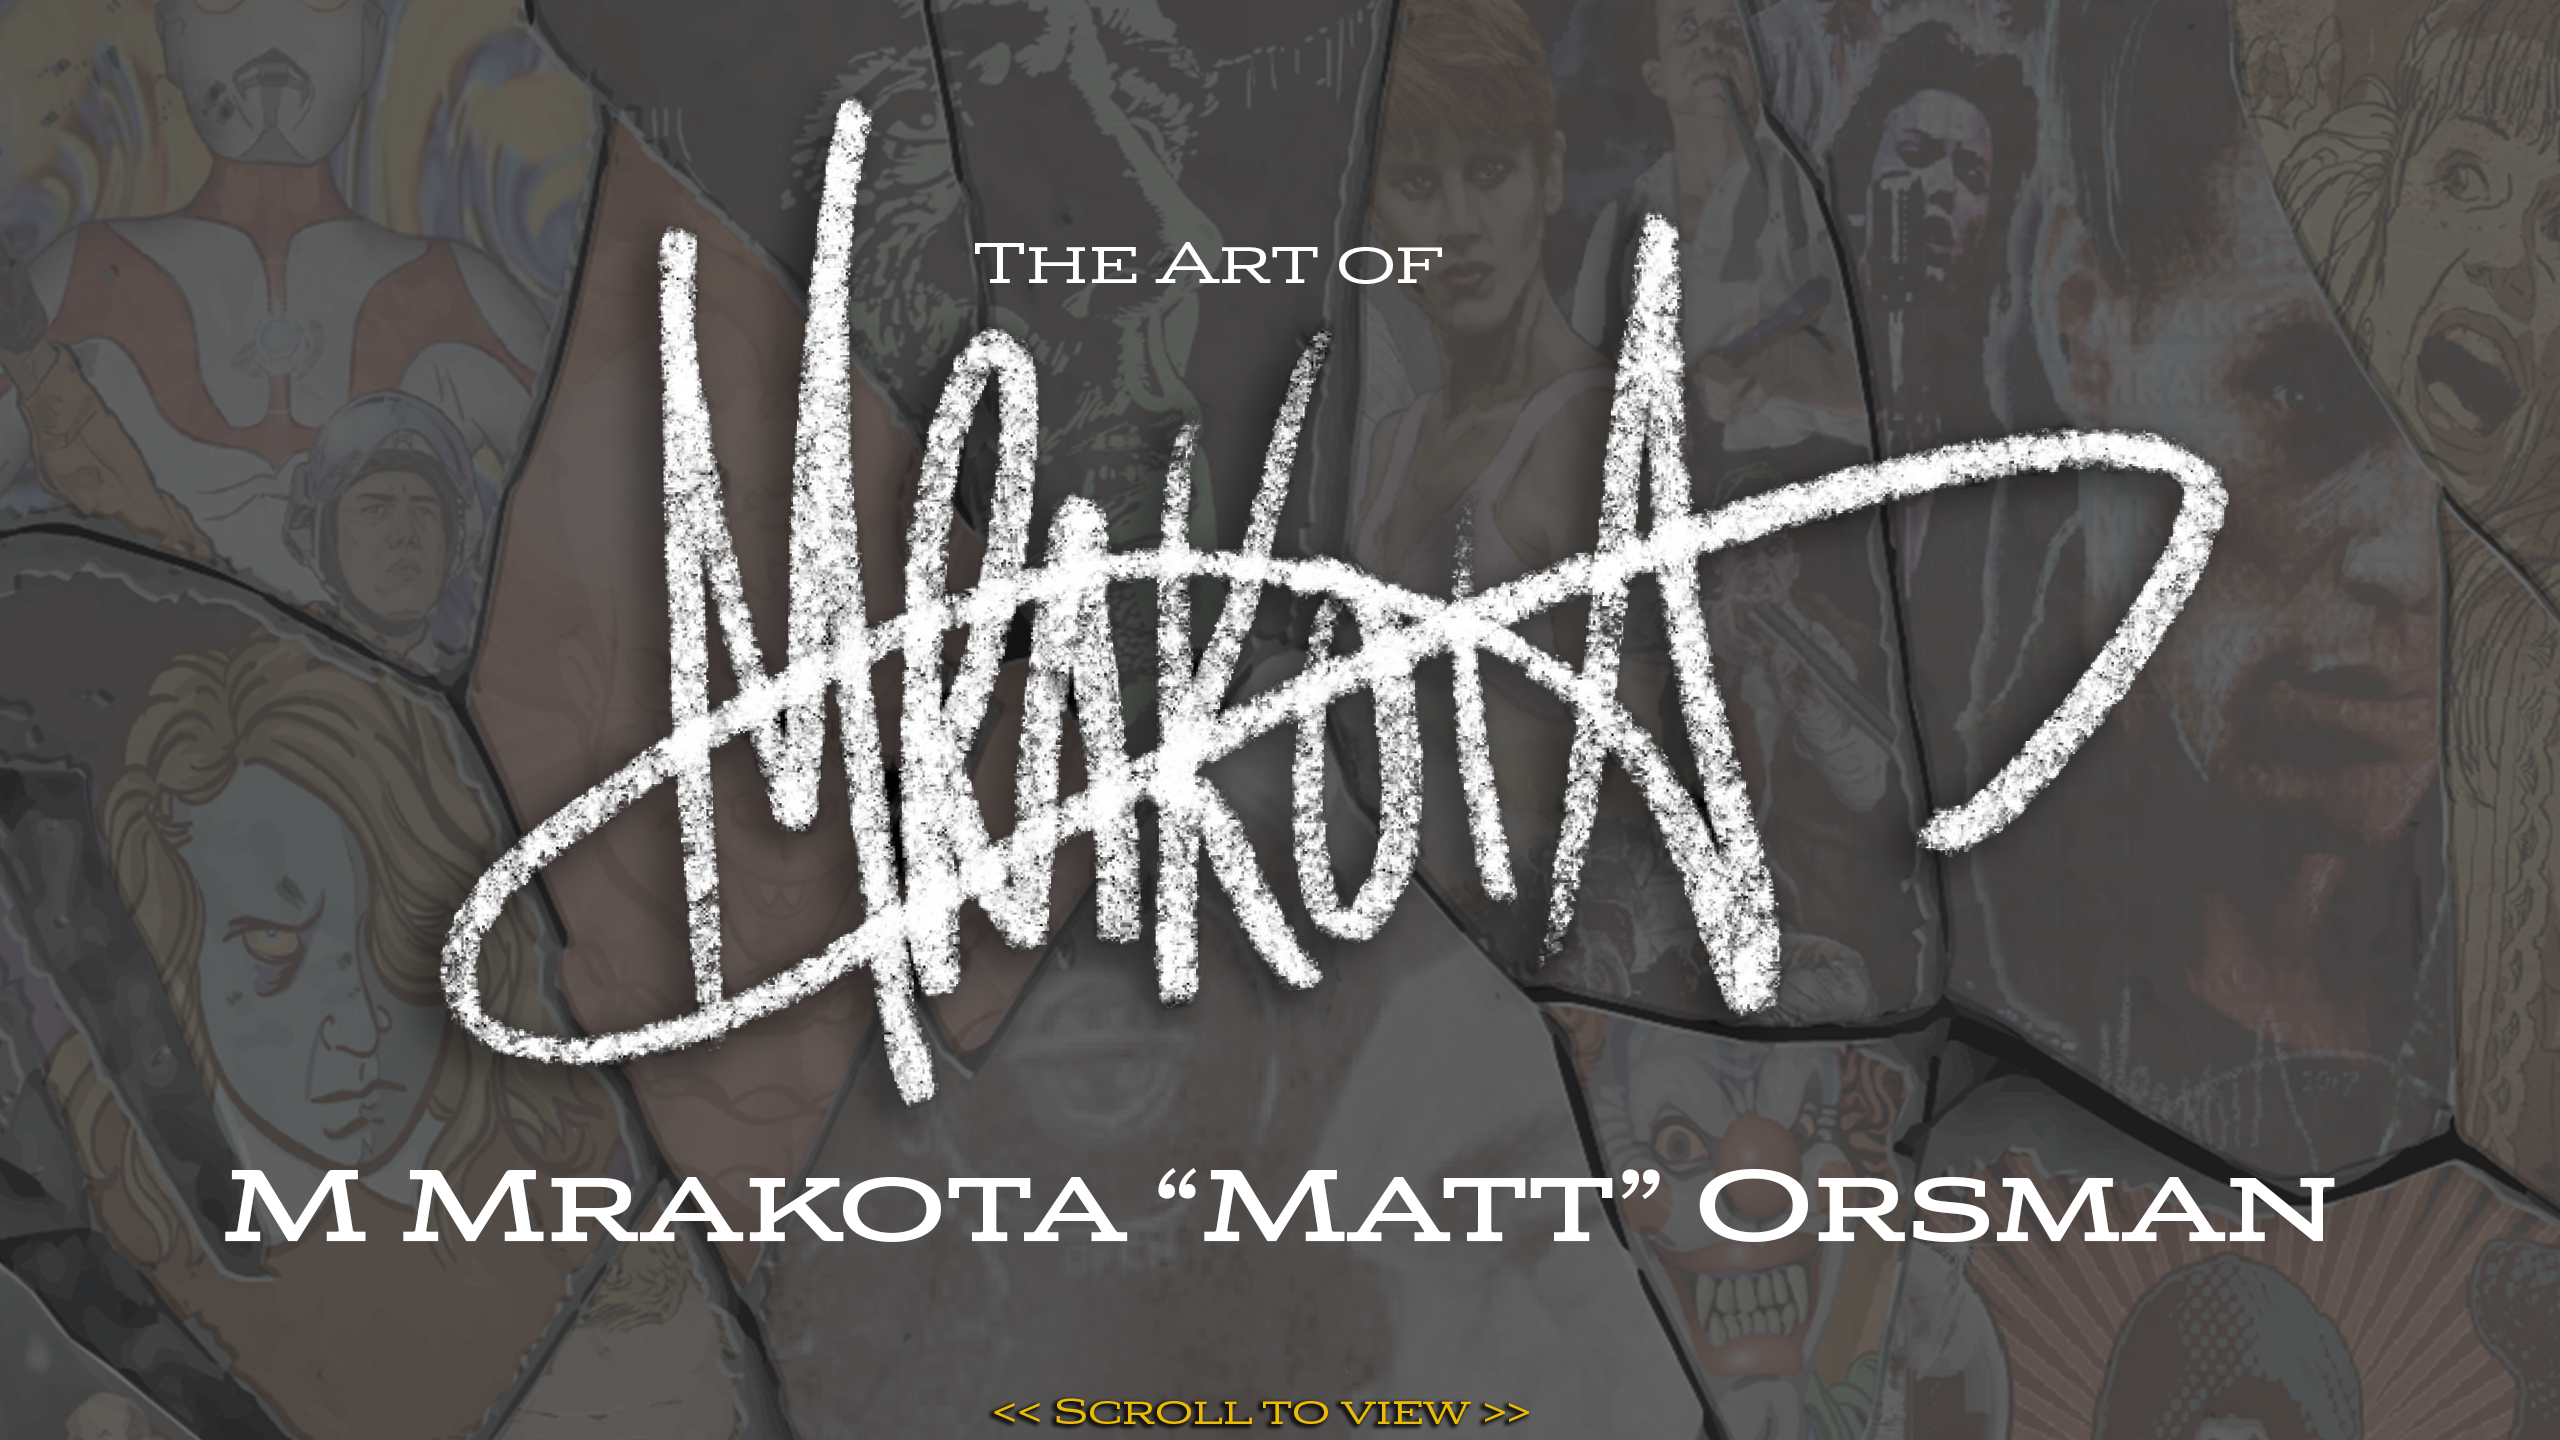 The Art of Mrakota. The art of M Mrakota Orsman.